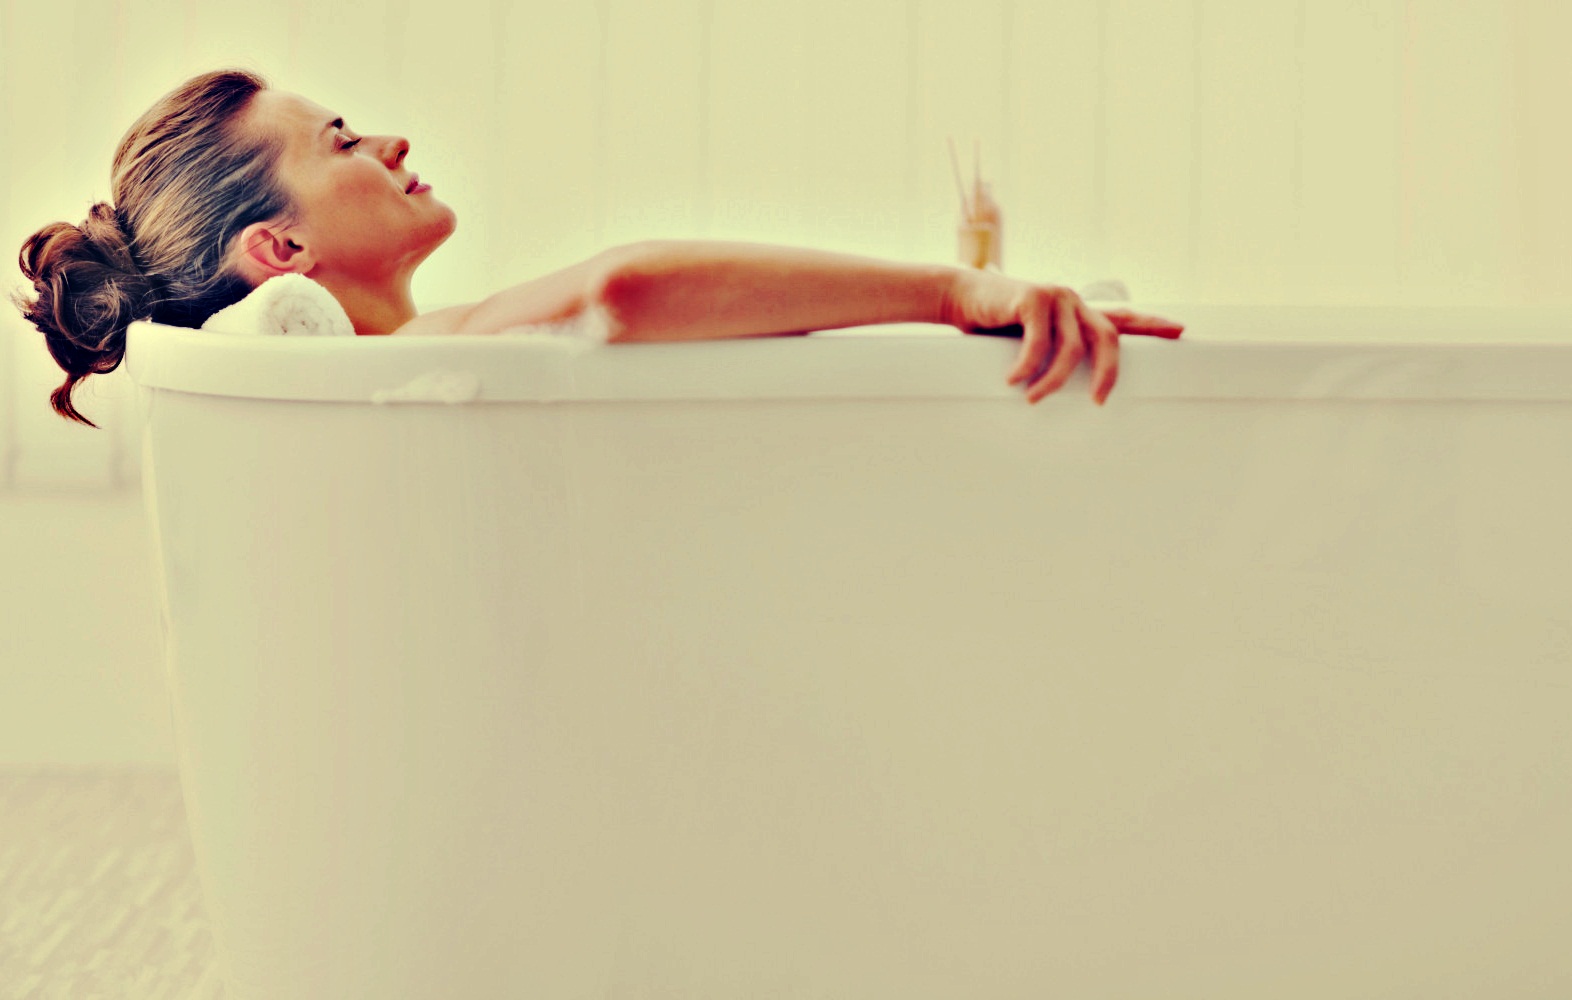 Hot Tub Rash Pictures Treatment Symptoms Causes